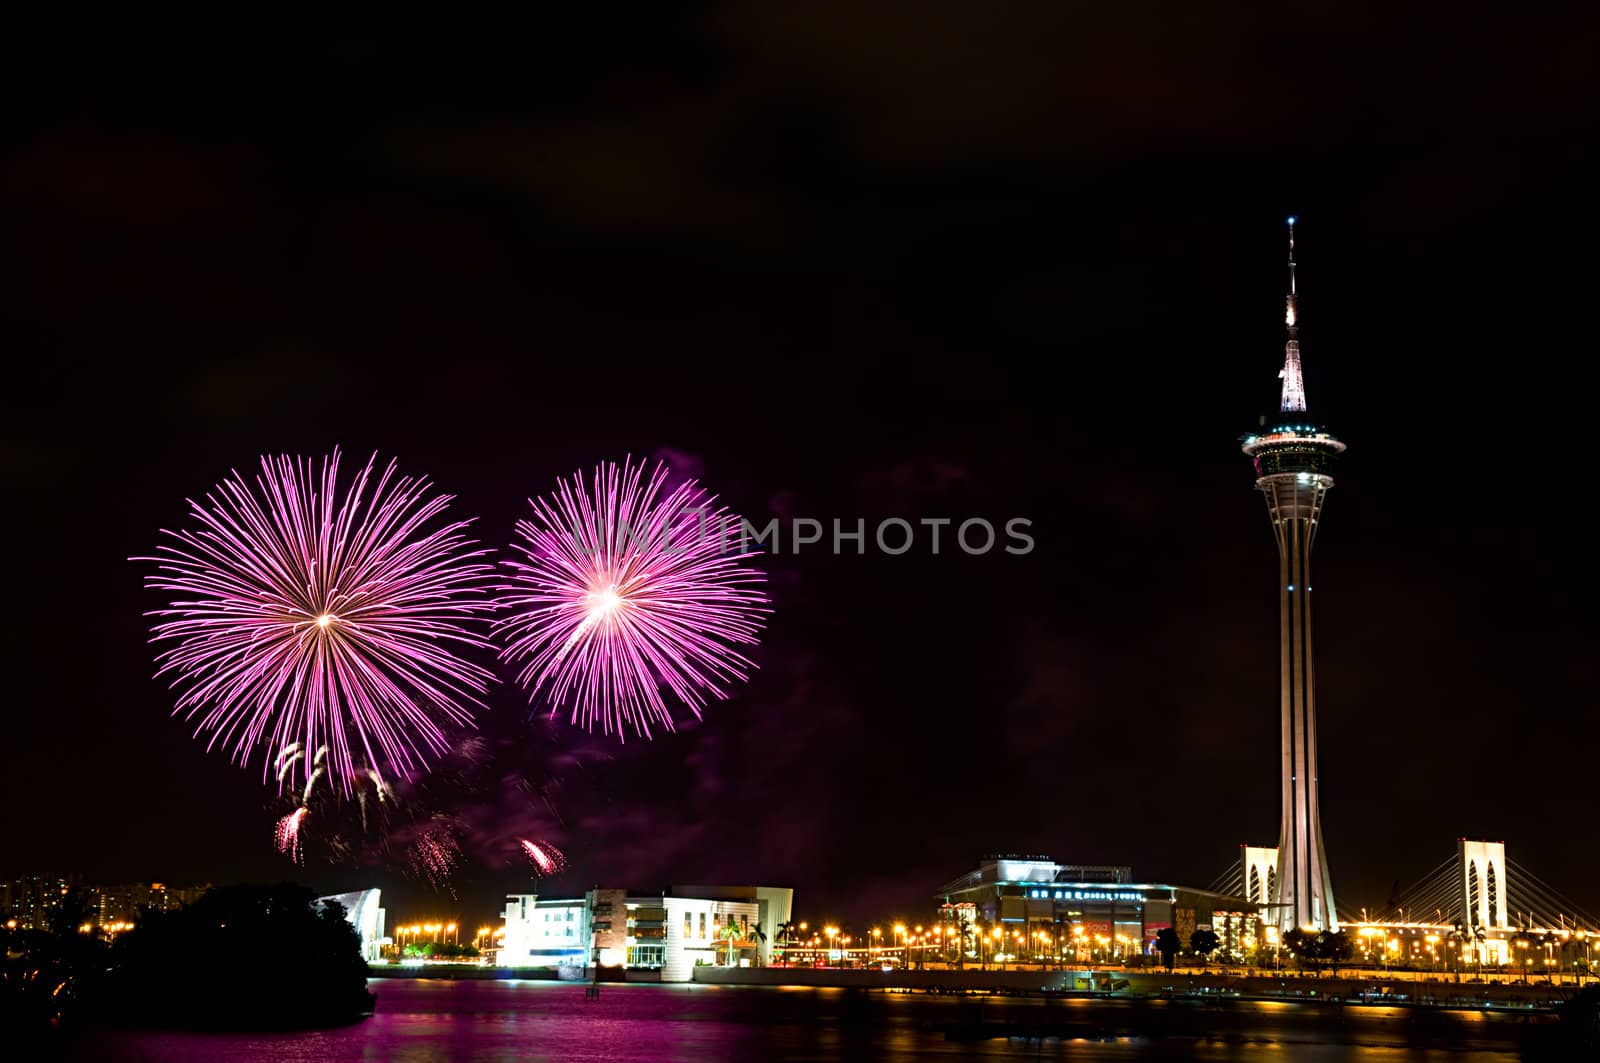 Macau International Fireworks Display Contest